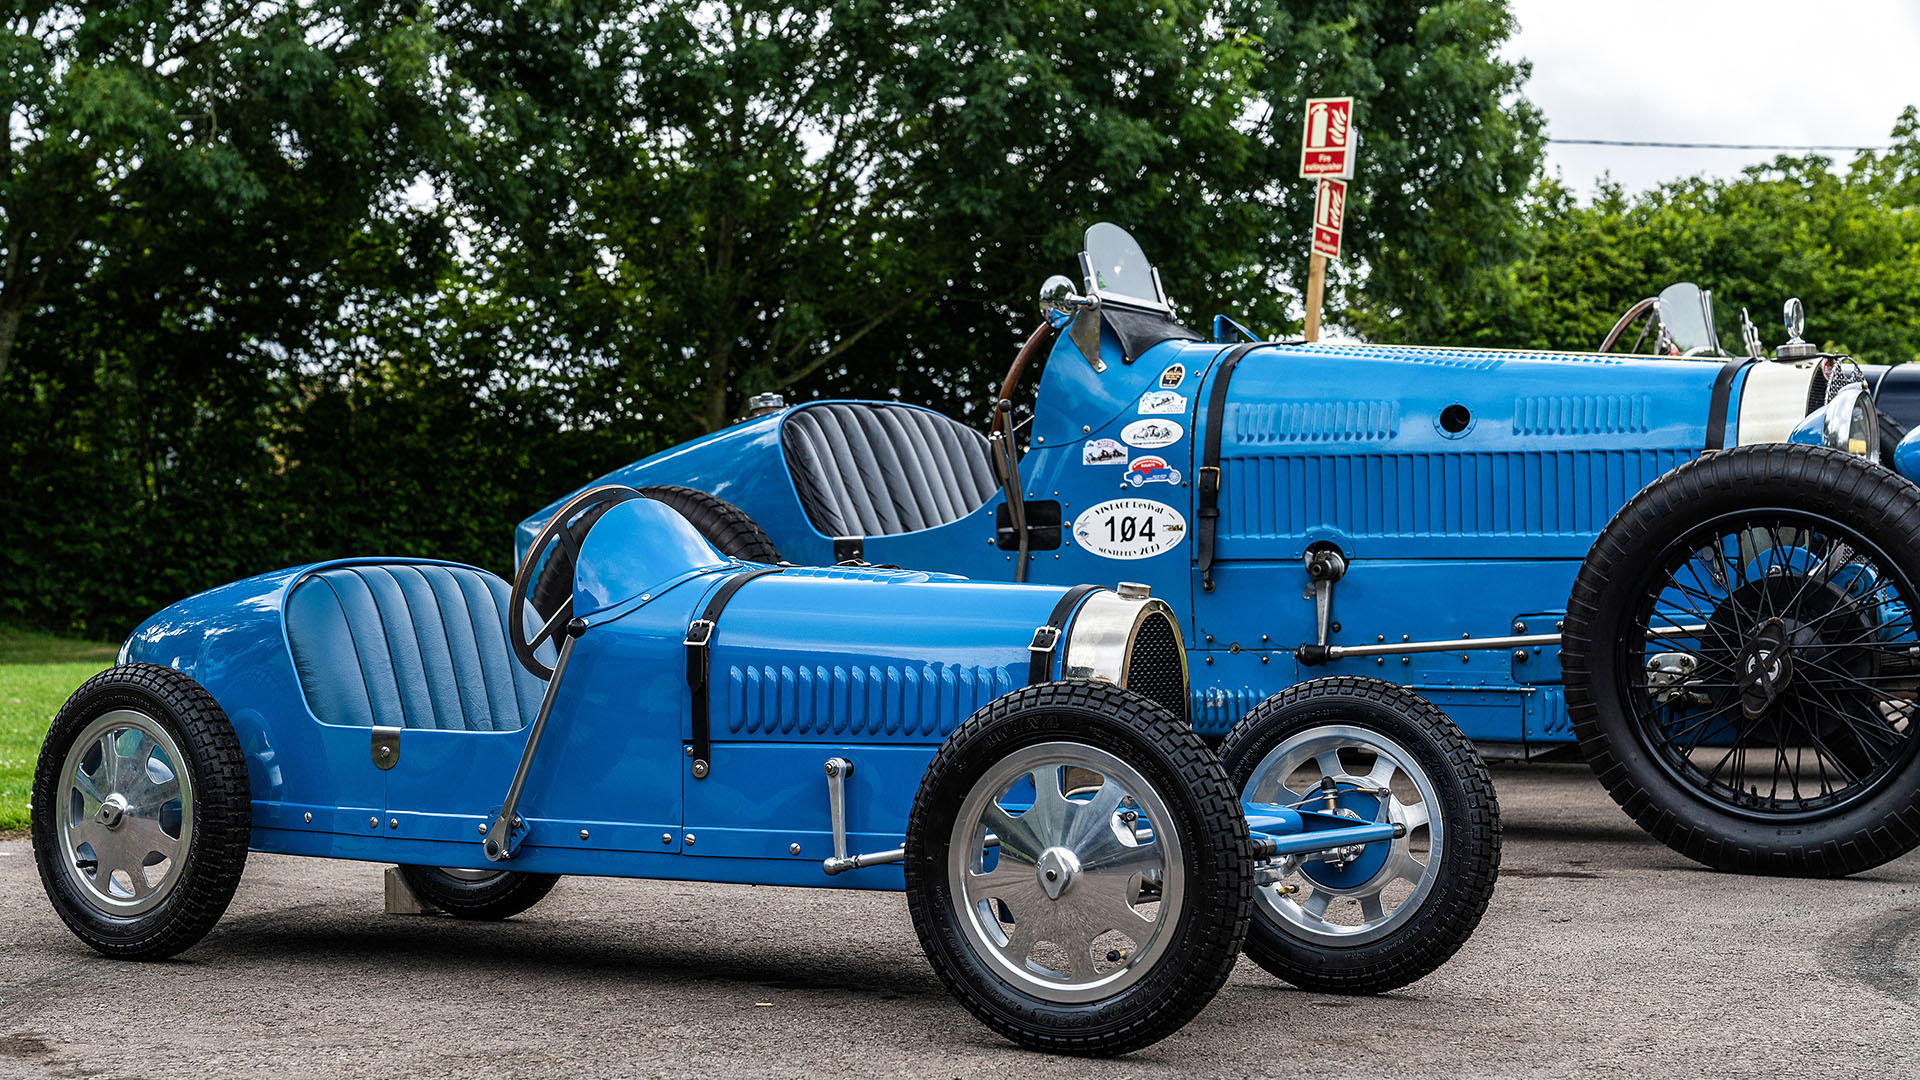 The Spiritual Bugatti England in Home of